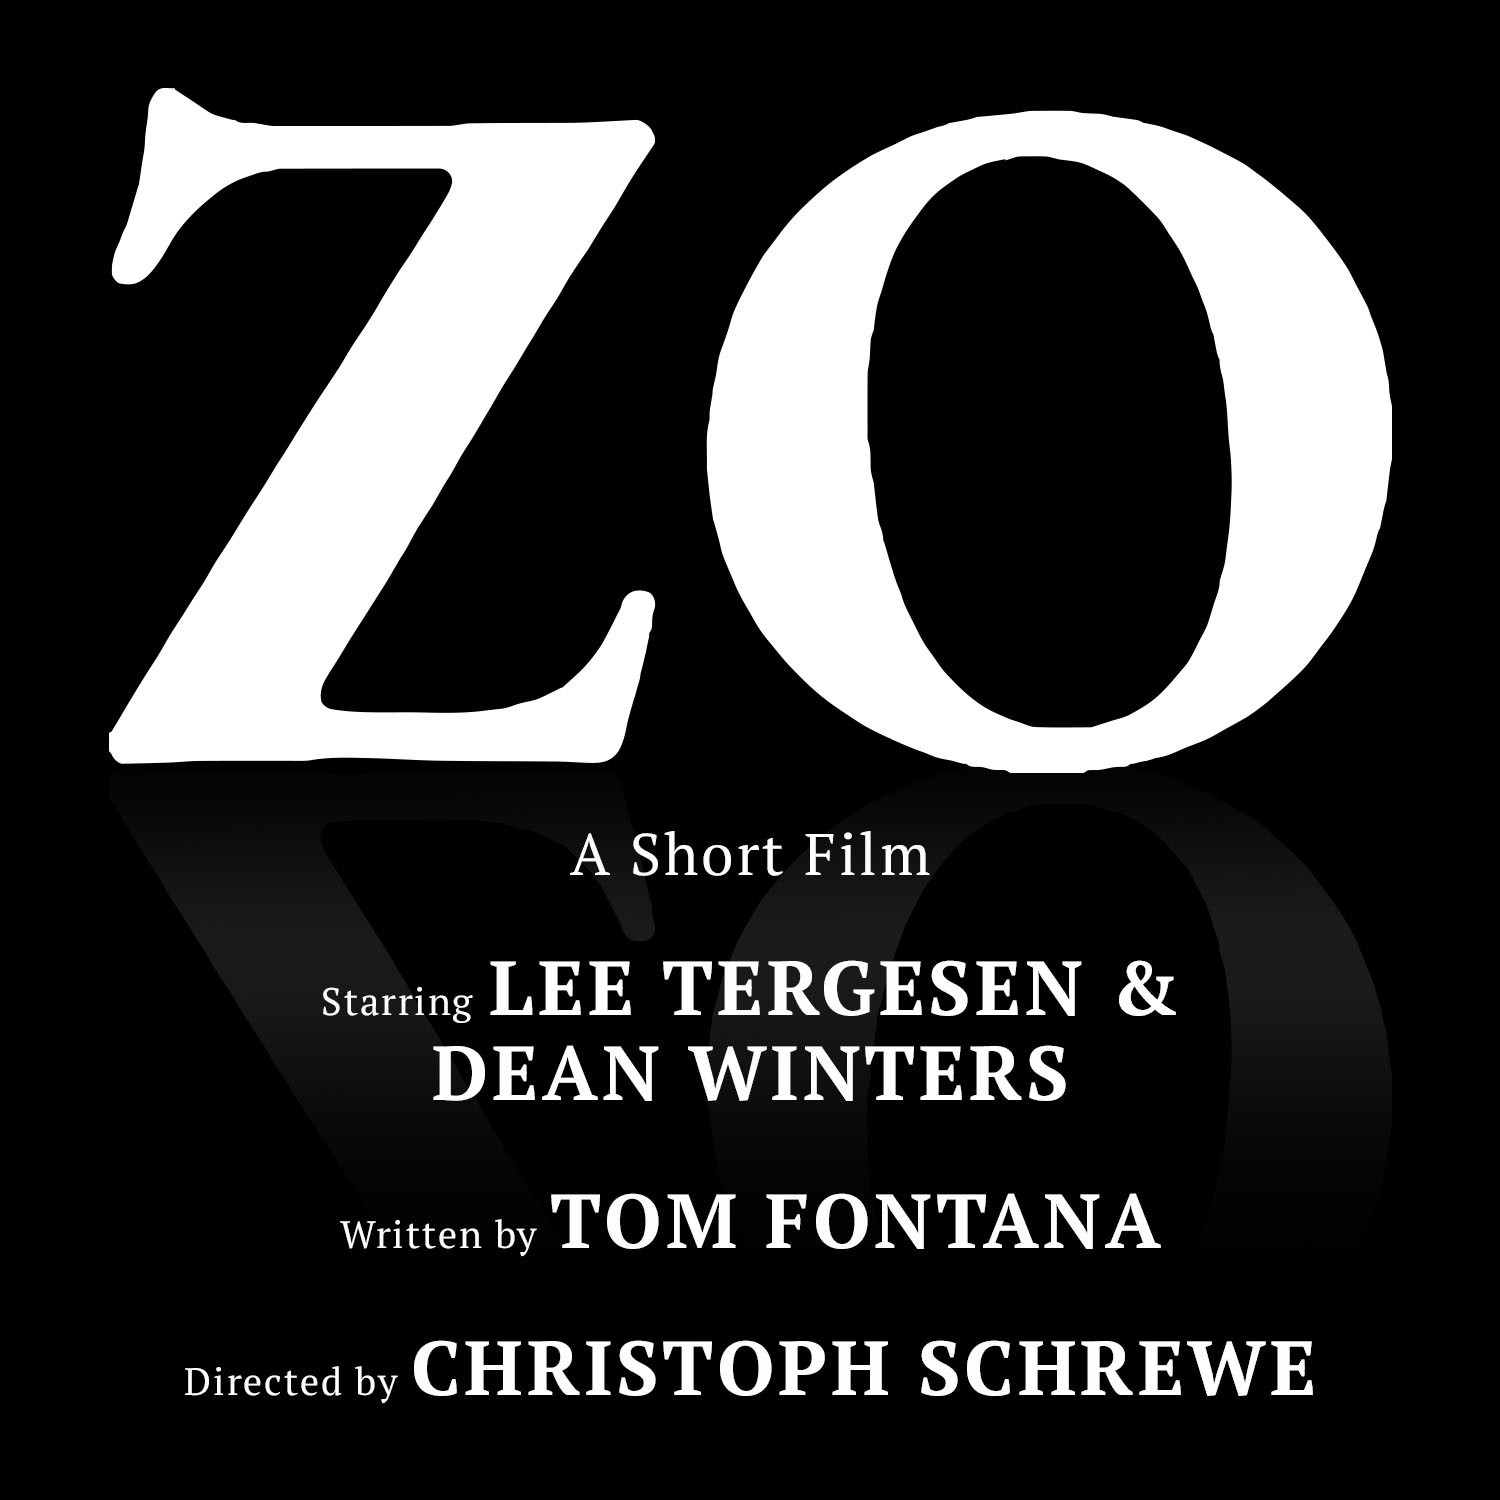 "ZO" Movie poster, written by WGI President Emeritus Tom Fontana